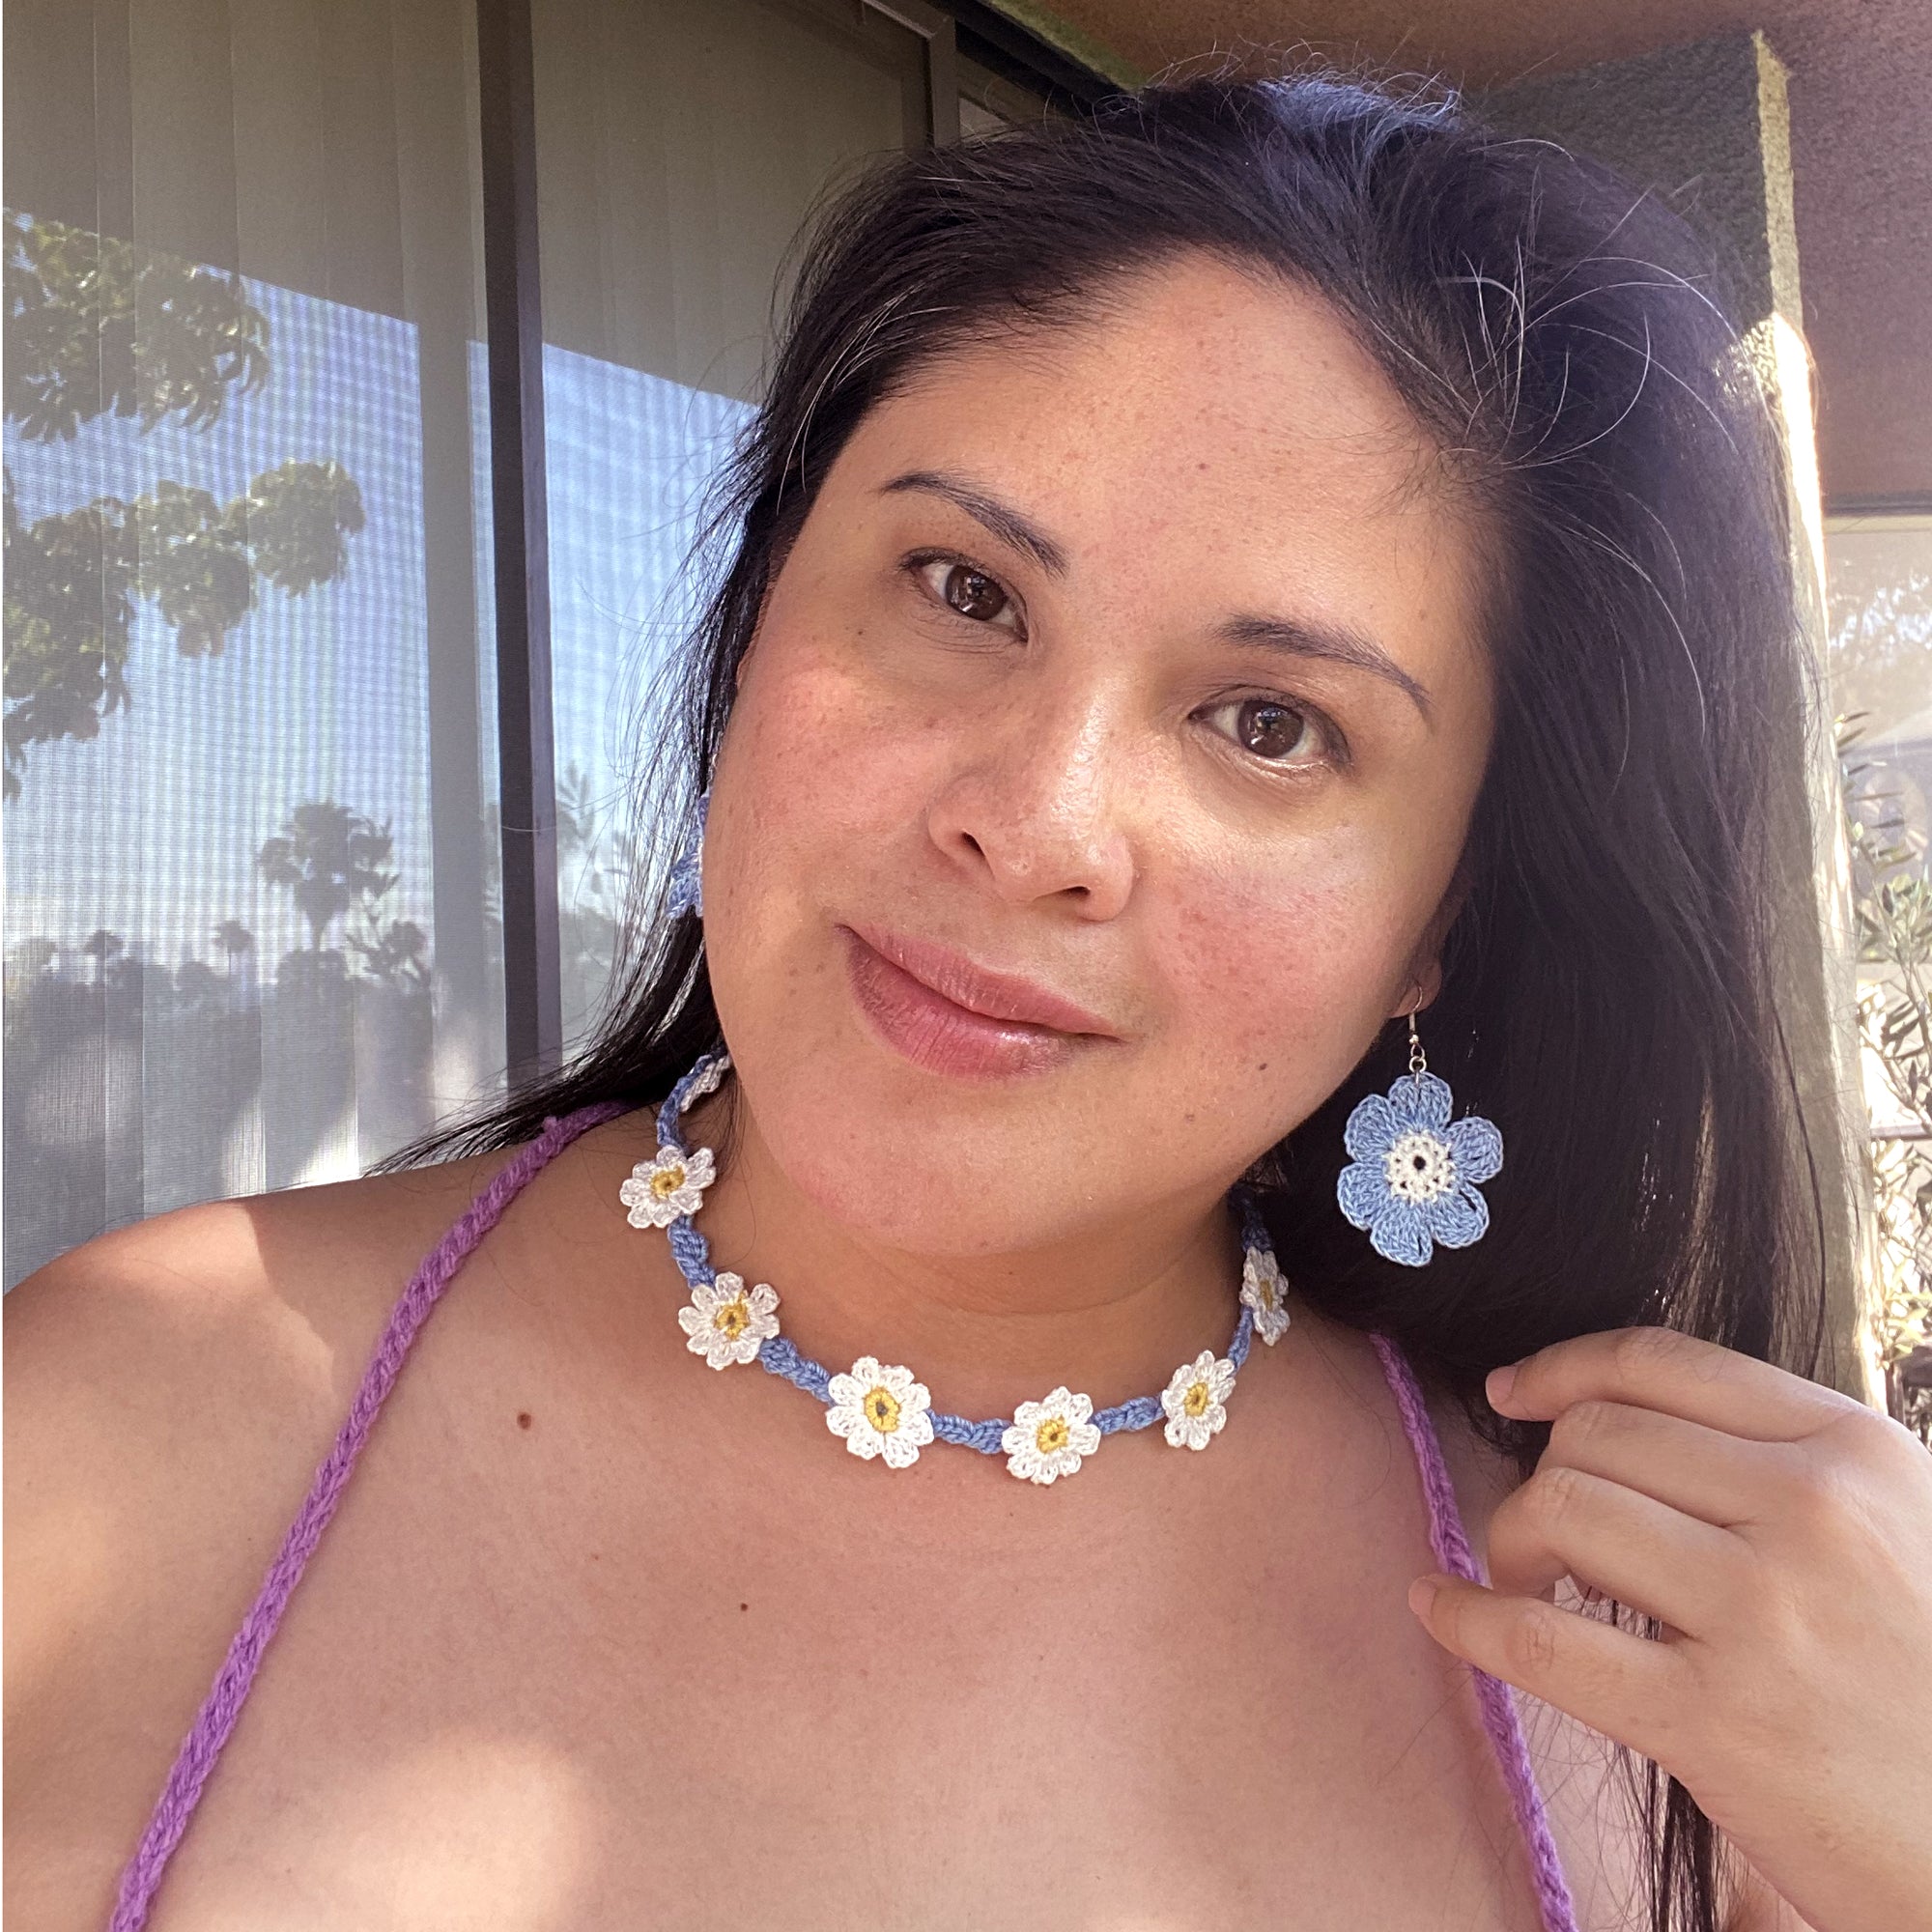 Jenny Dayco wearing a blue and white daisy crochet jewelry set